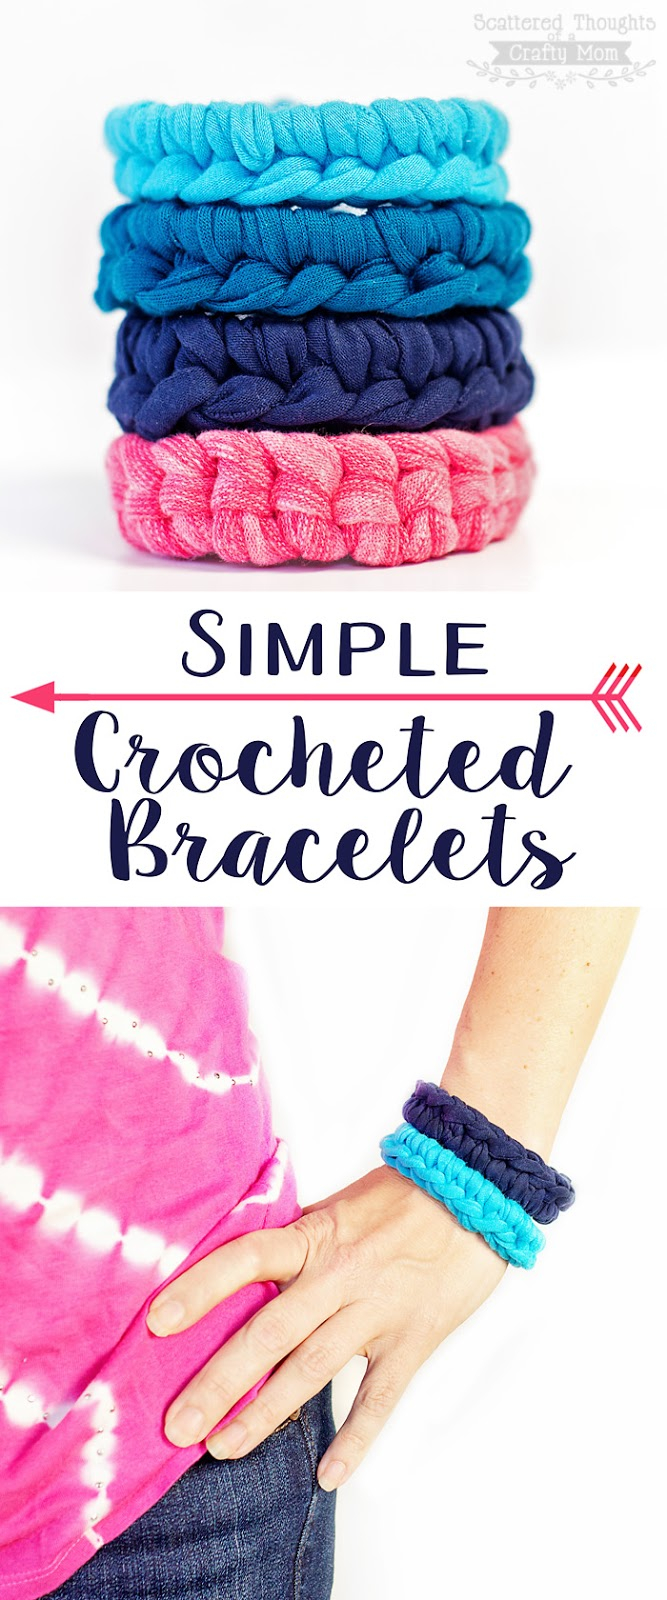 Crochet Pattern Bracelet Simple Crocheted Bracelet Scattered Thoughts Of A Crafty Mom